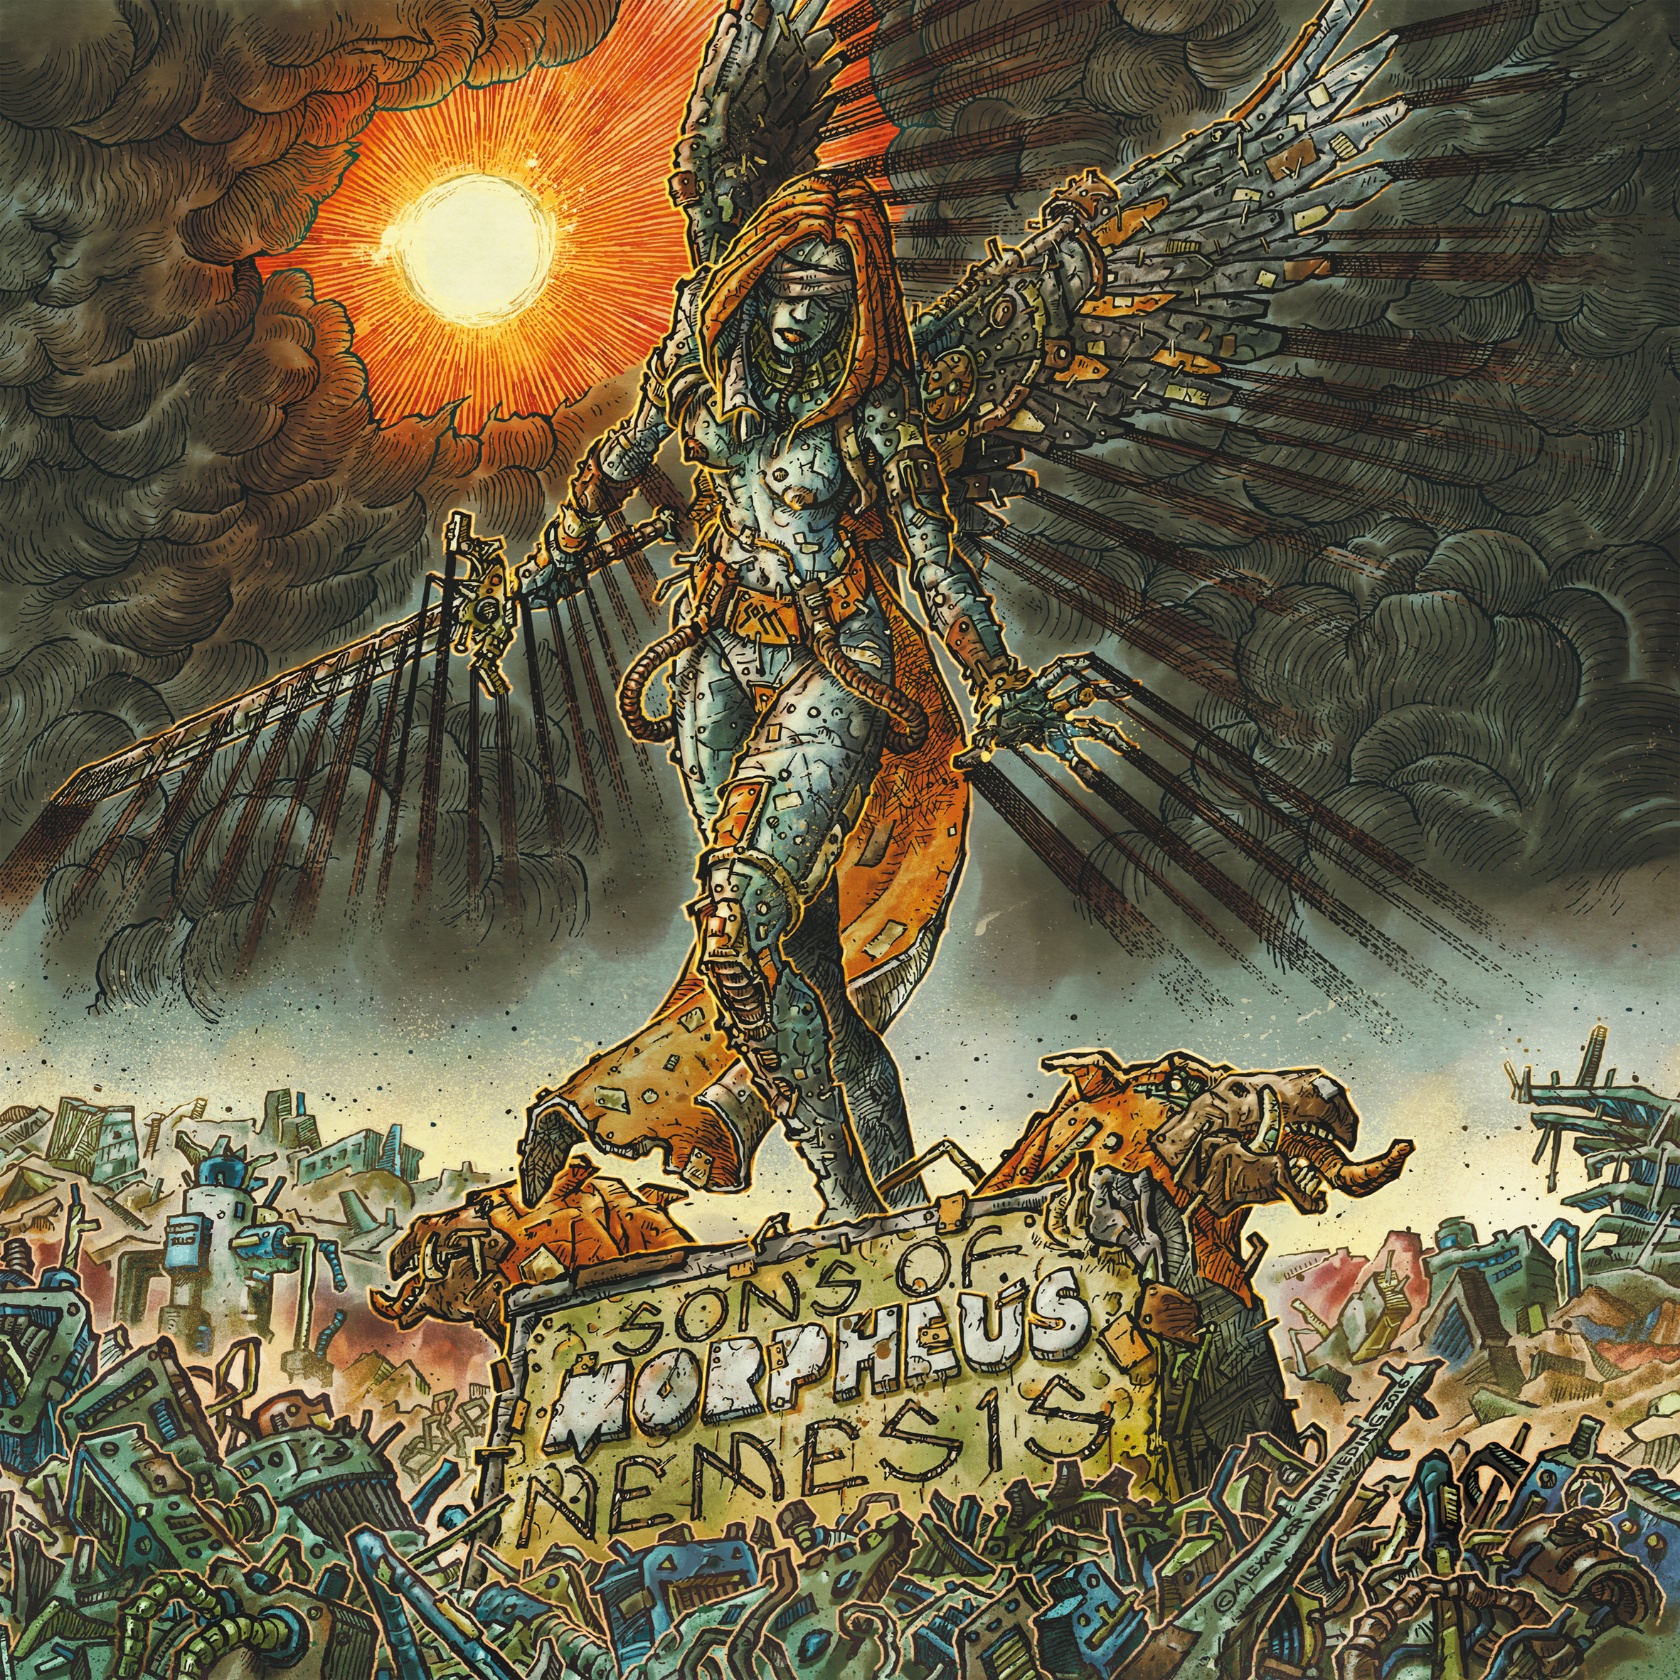 Sons Of Morpheus – Nemesis (Cover)